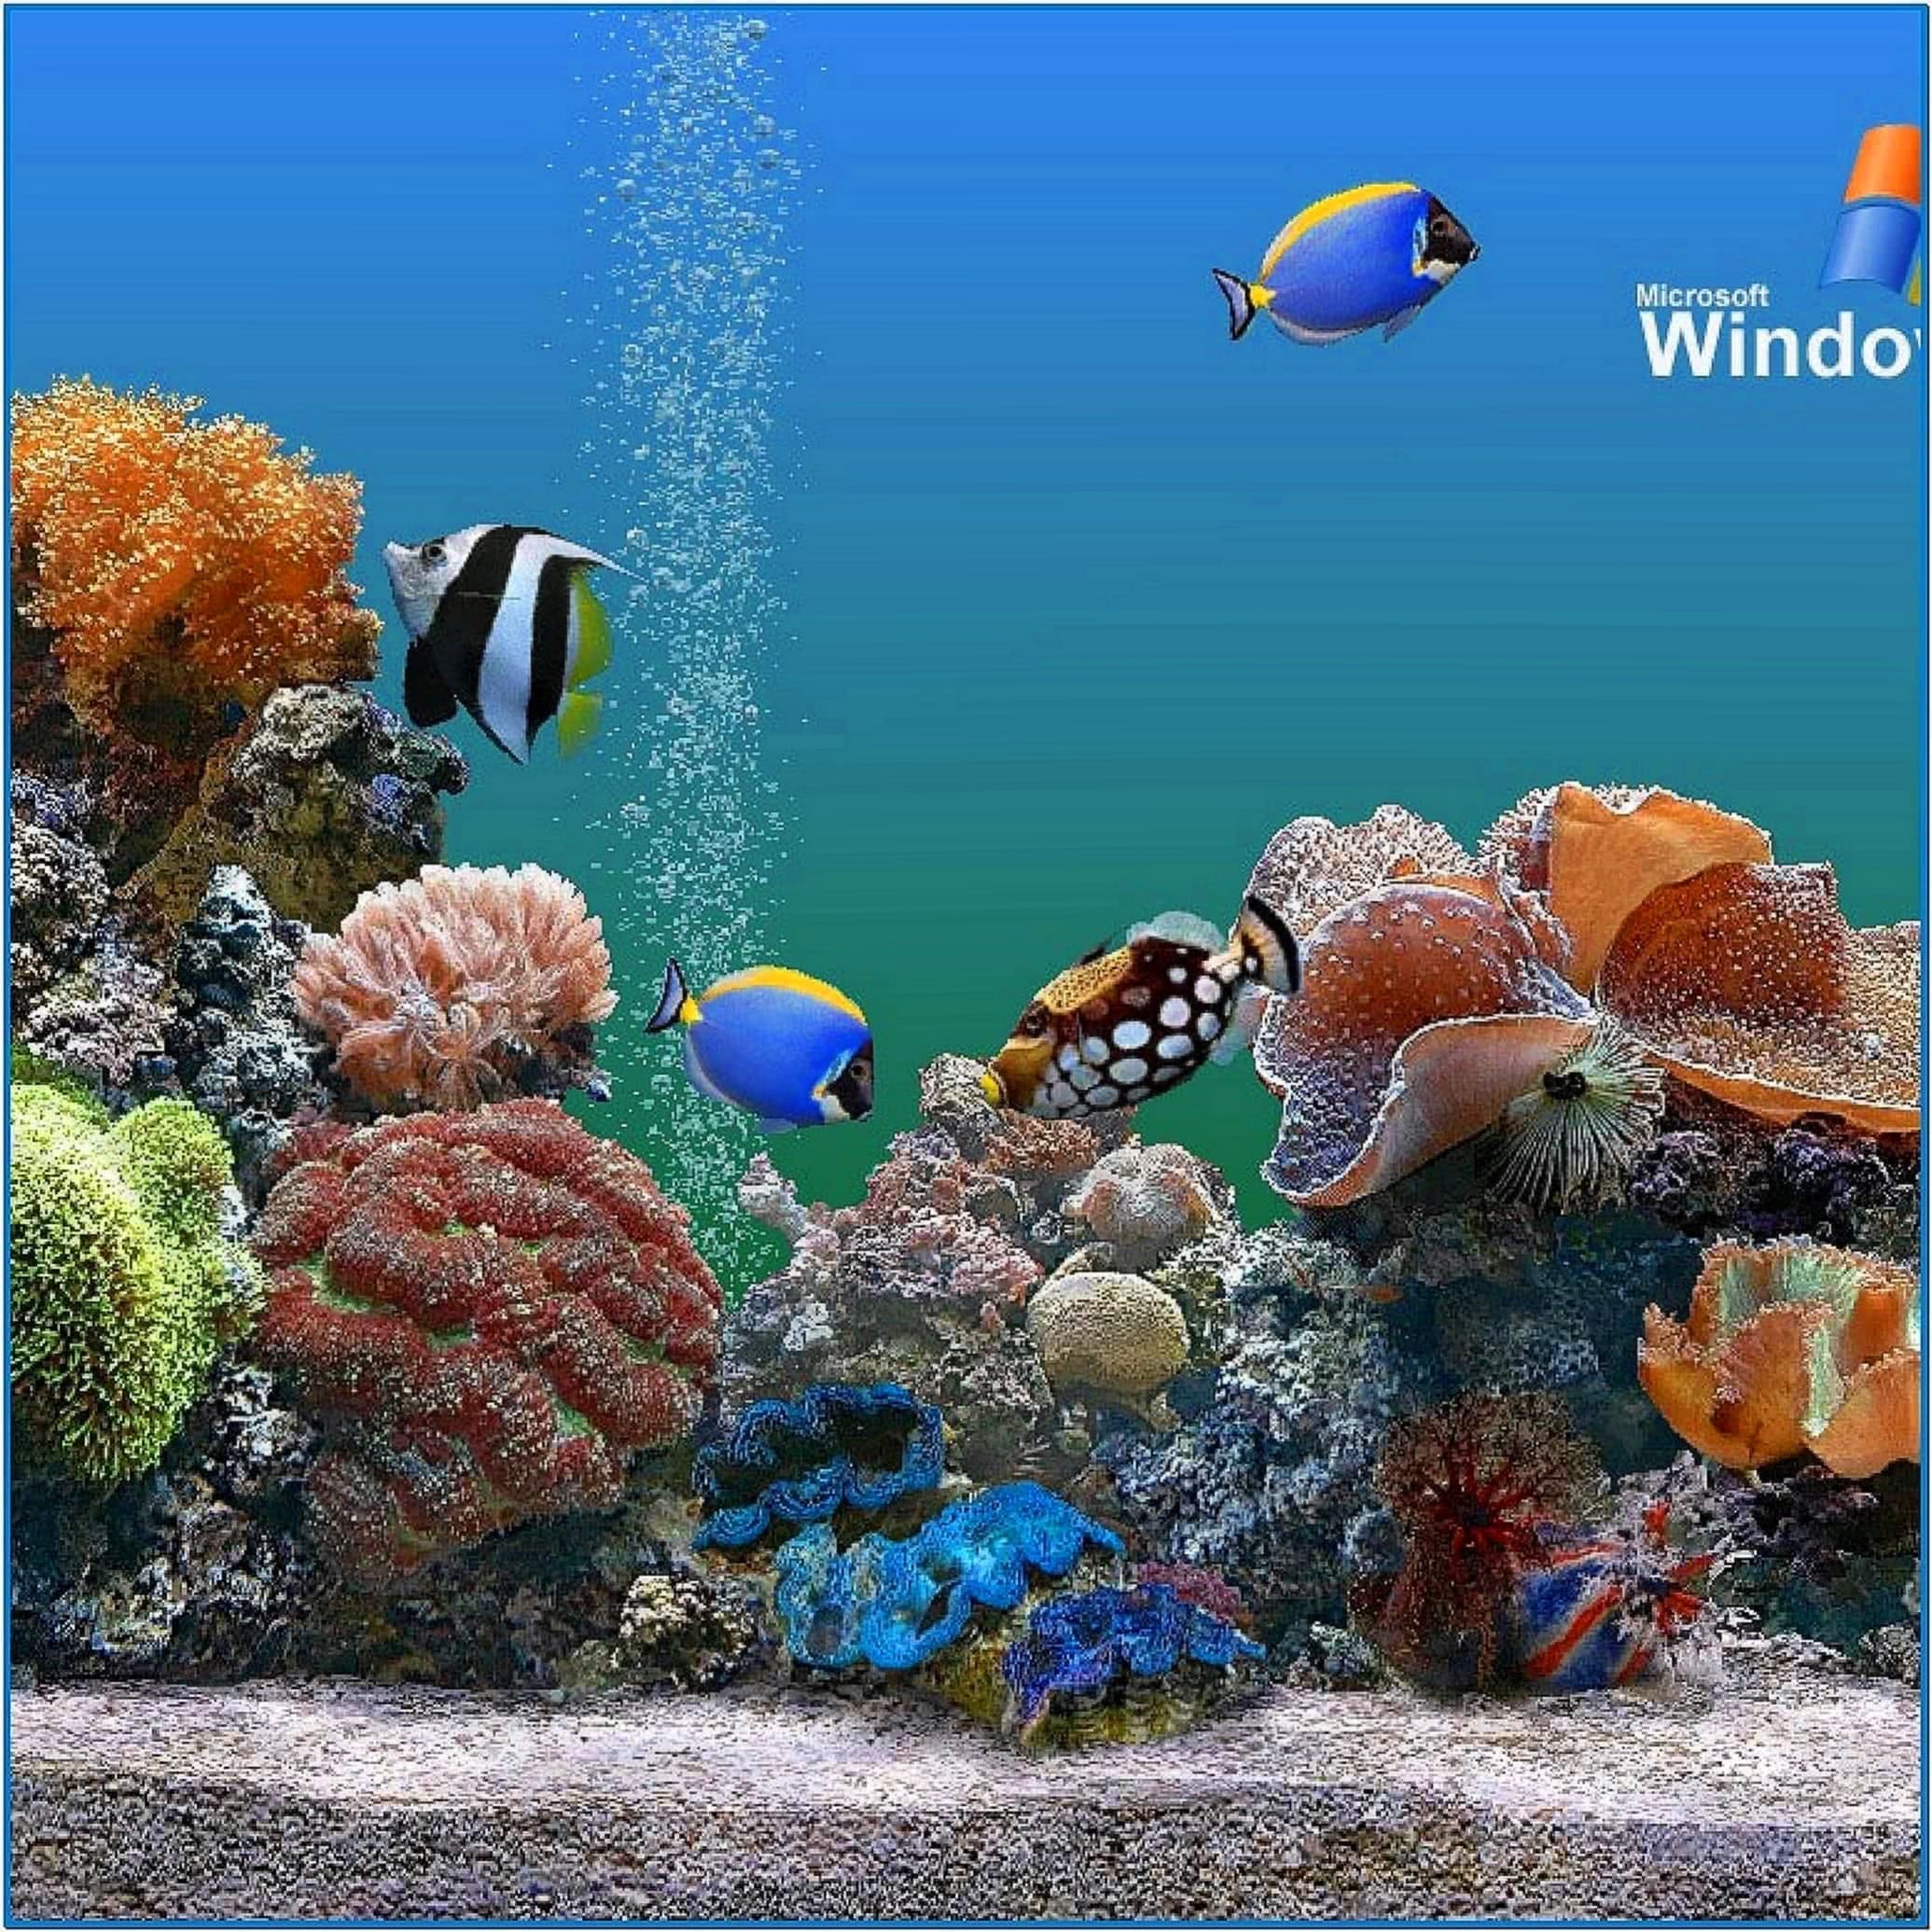 Aquarium screensaver for ipad - Download free